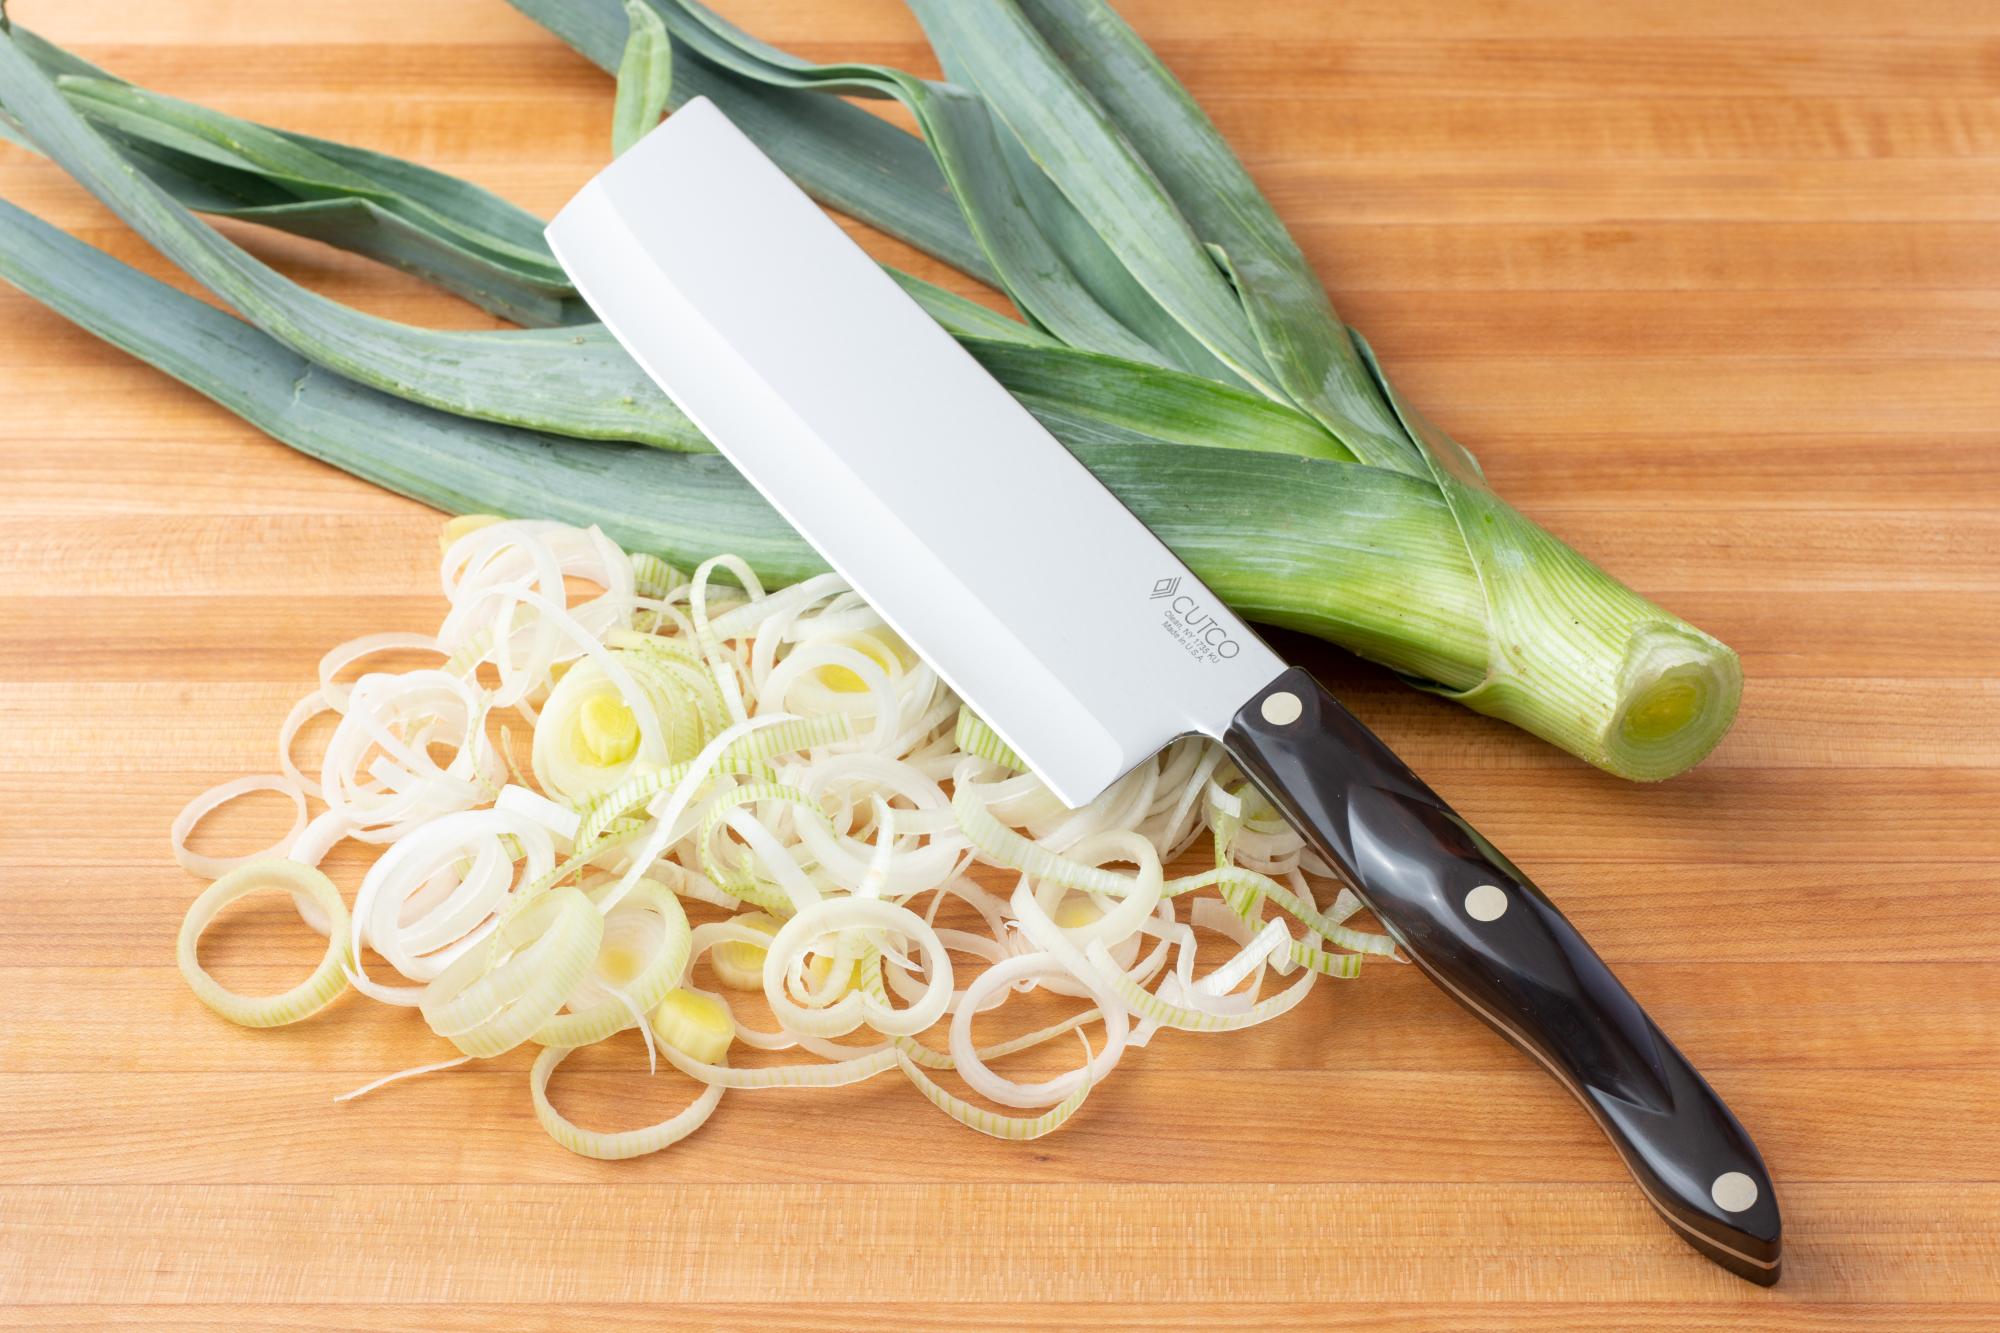 Sliced leeks with a Vegetable Knife.